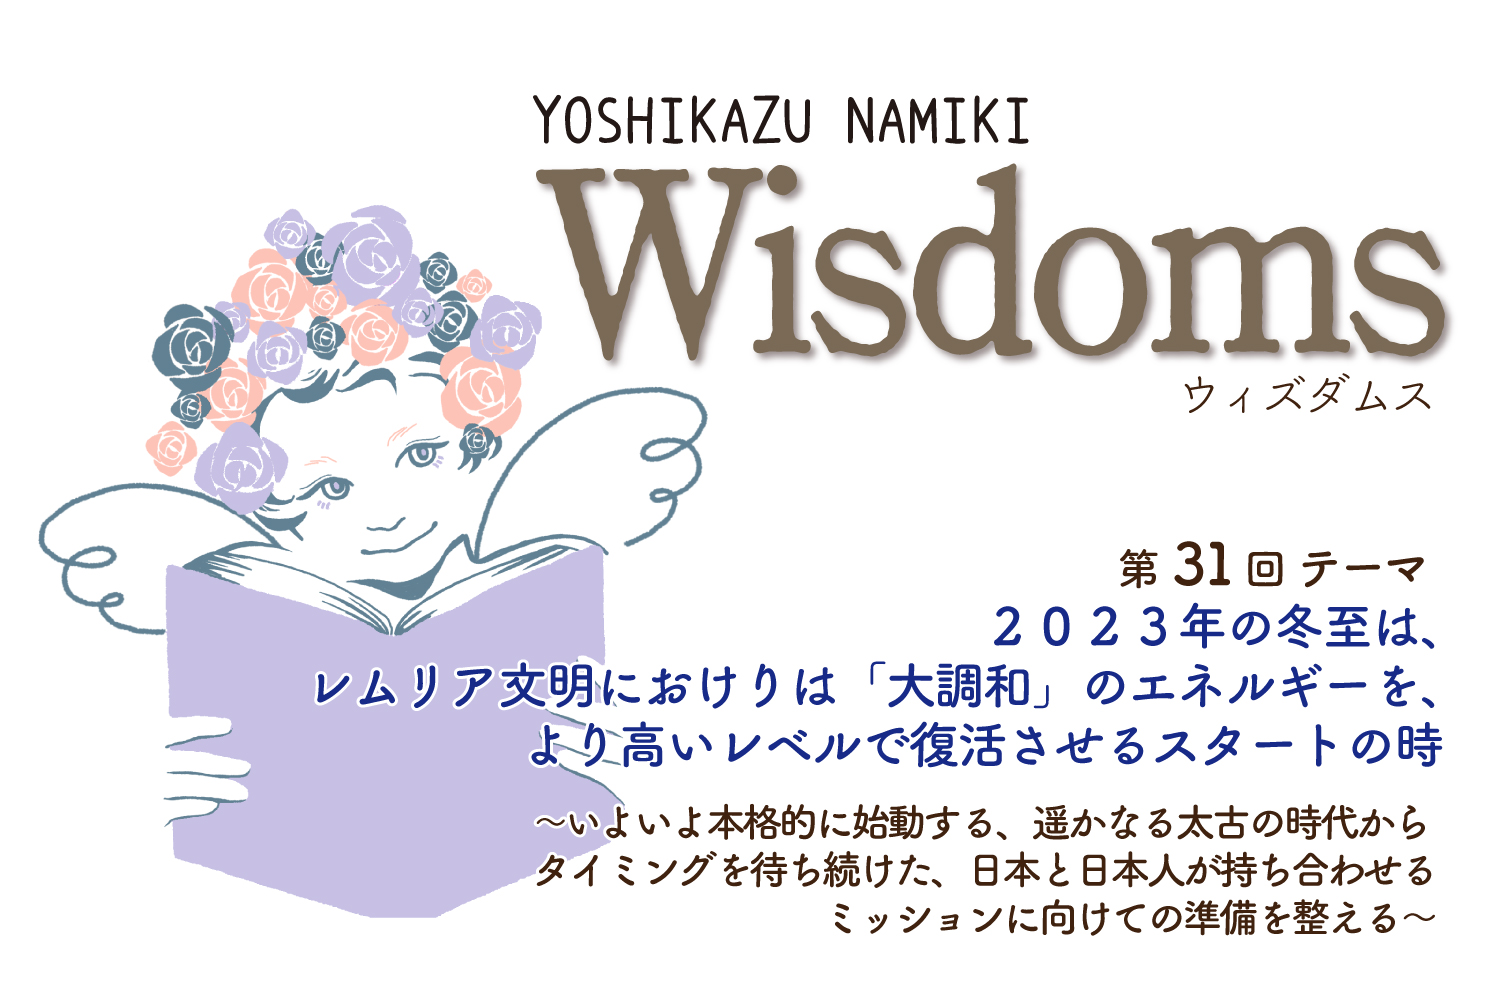 Wisdoms202310